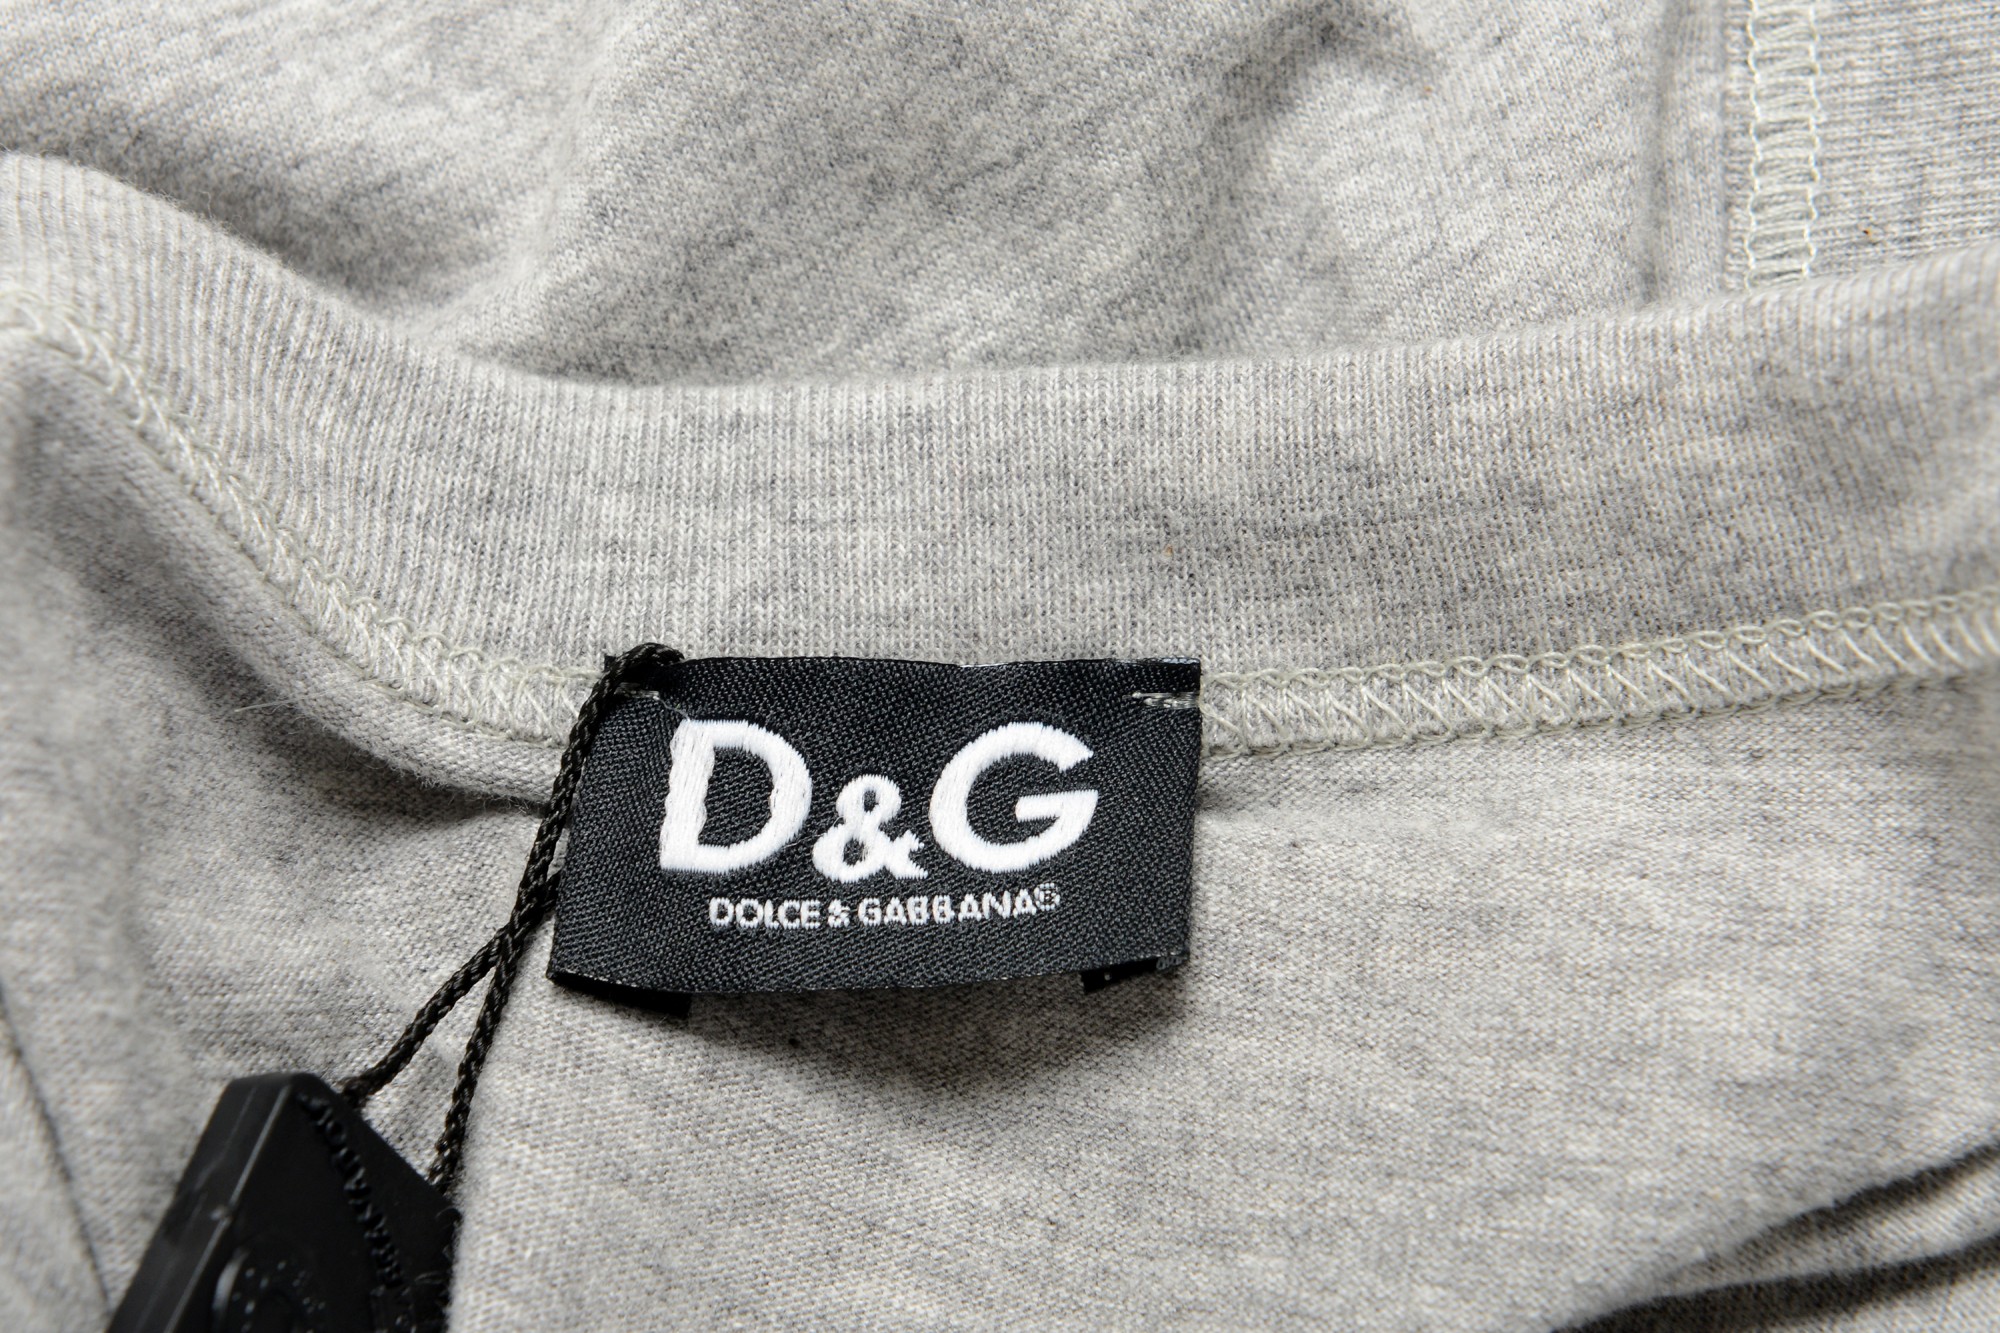 Dolce & Gabbana D&G Men's Graphic Print Tank Top